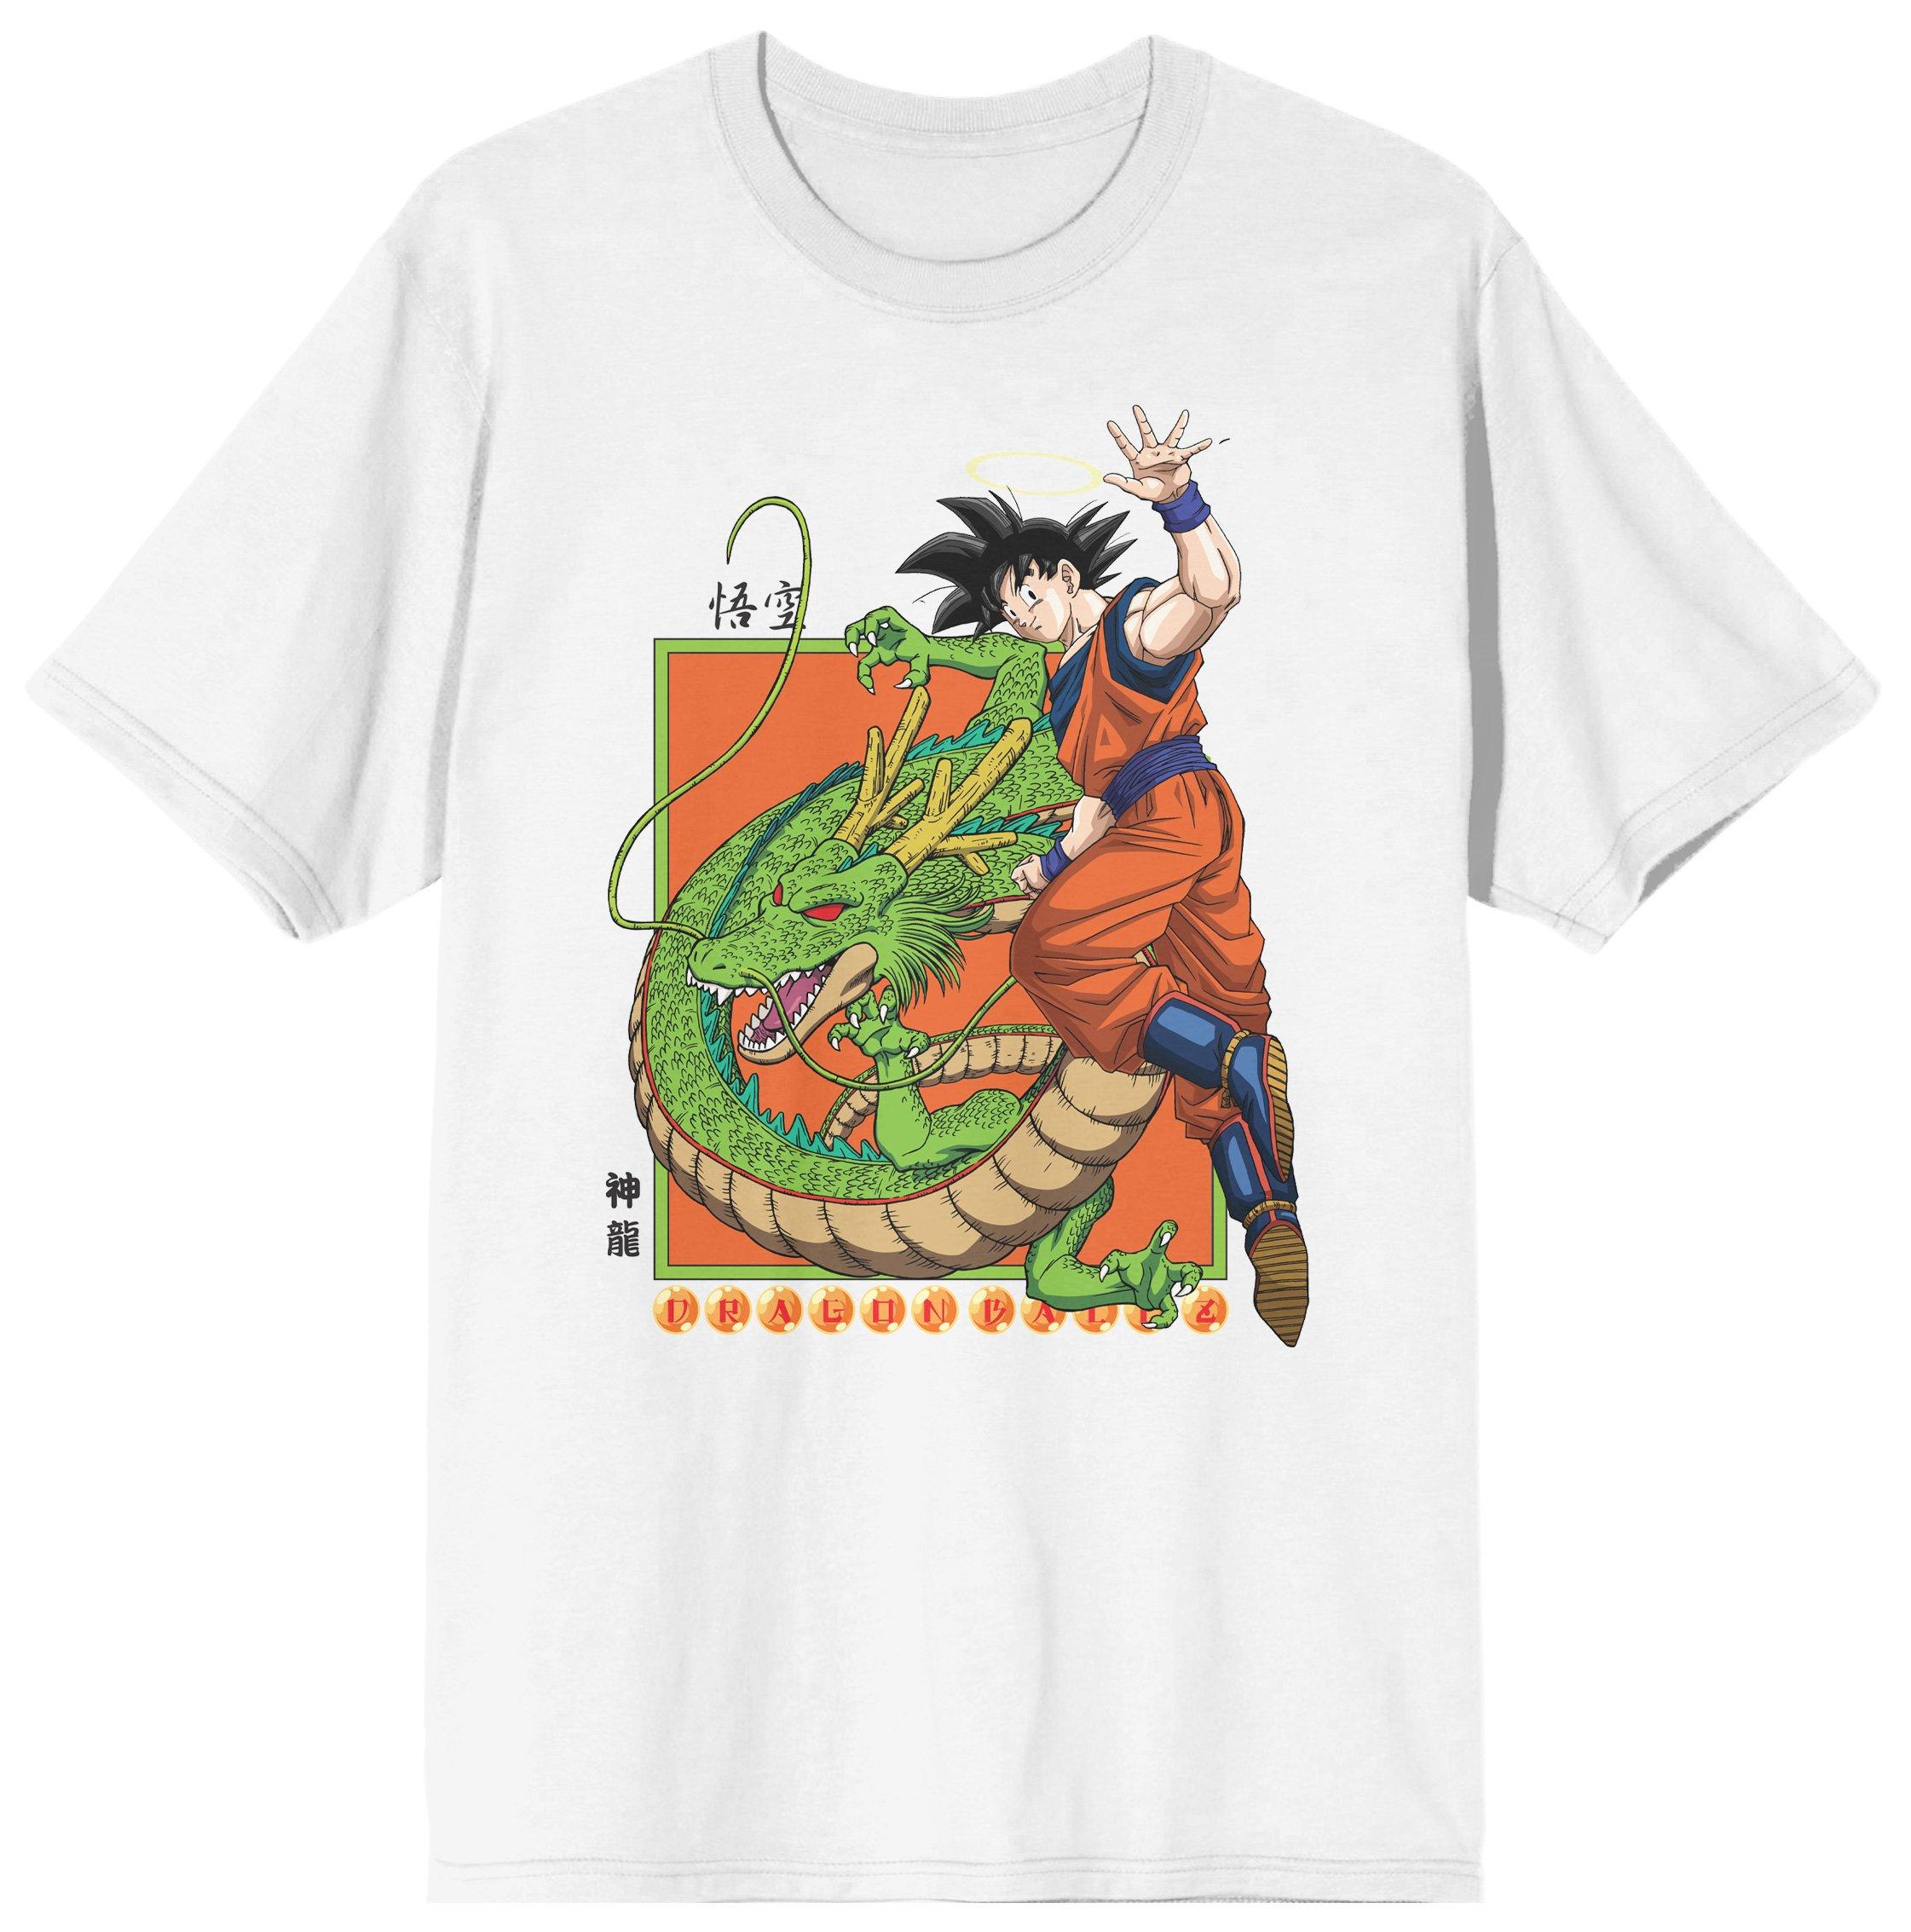 Dragon Ball Z Goku and Shenron Men's White Short Sleeve Graphic T-Shirt